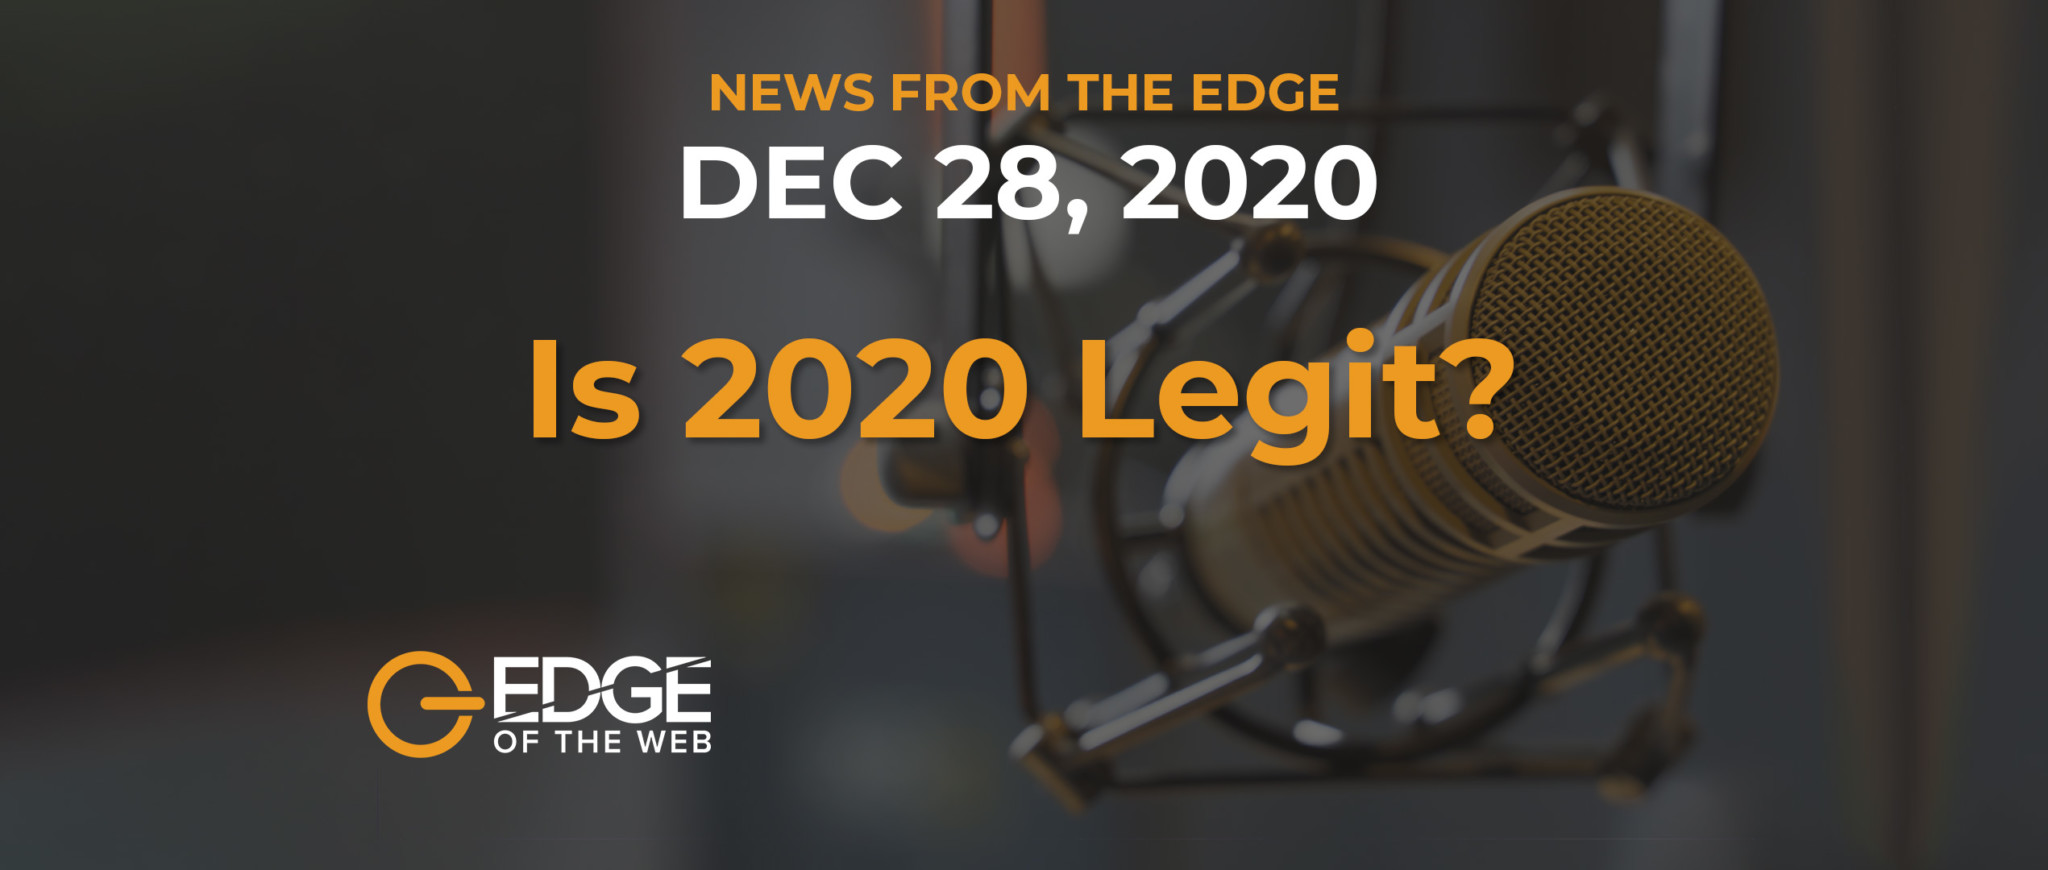 EDGE of the Web News | December 29, 2020